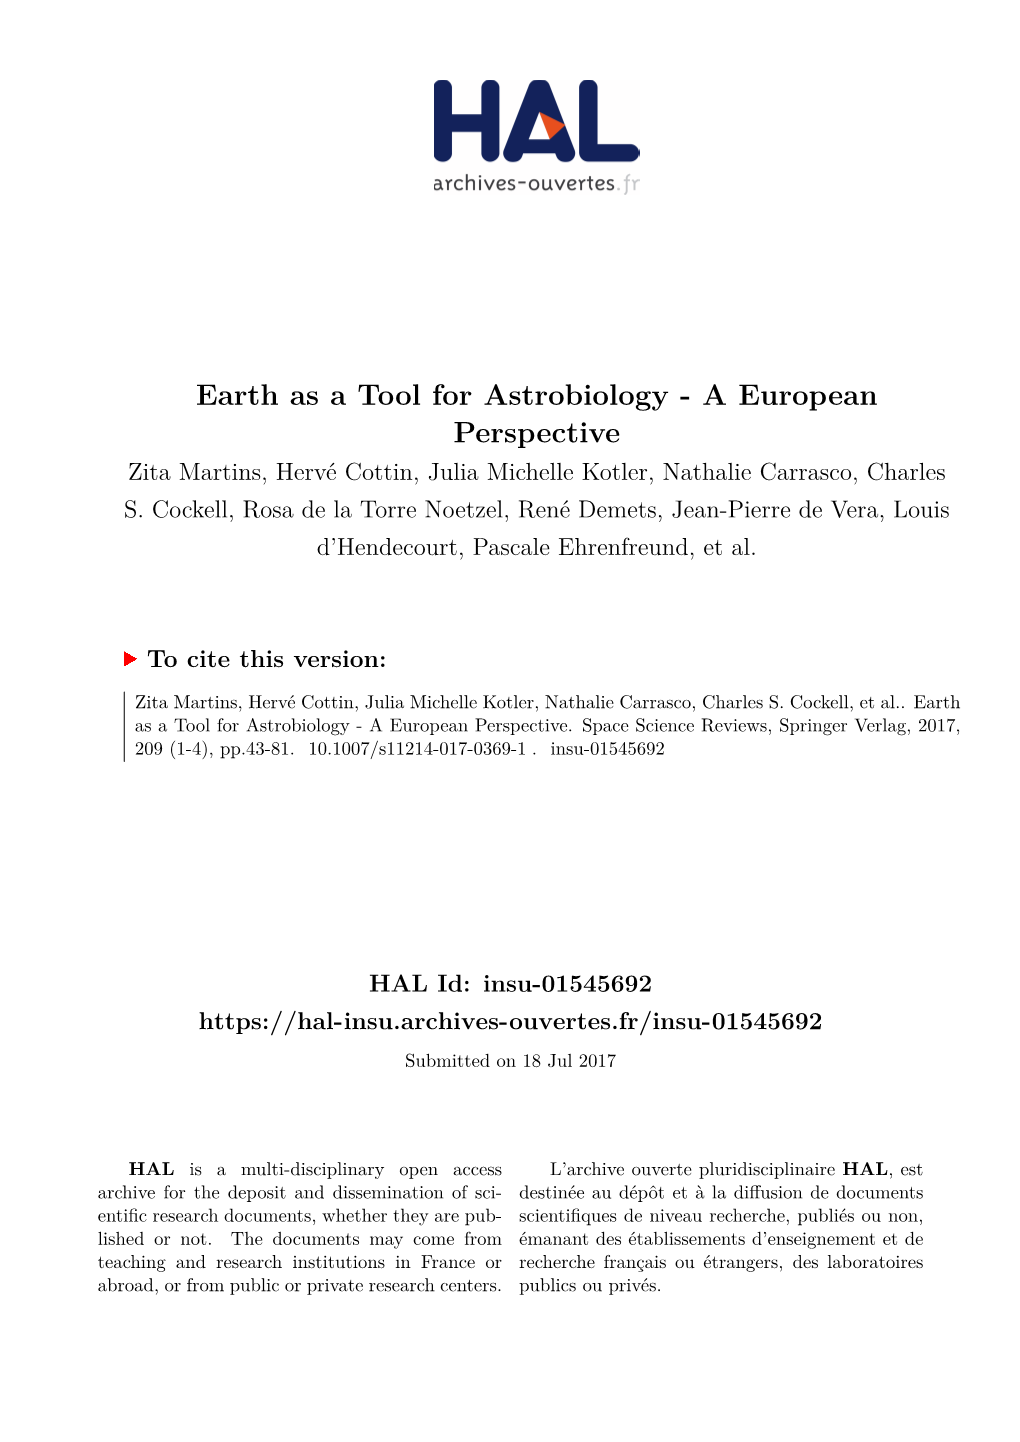 Earth As a Tool for Astrobiology - a European Perspective Zita Martins, Hervé Cottin, Julia Michelle Kotler, Nathalie Carrasco, Charles S